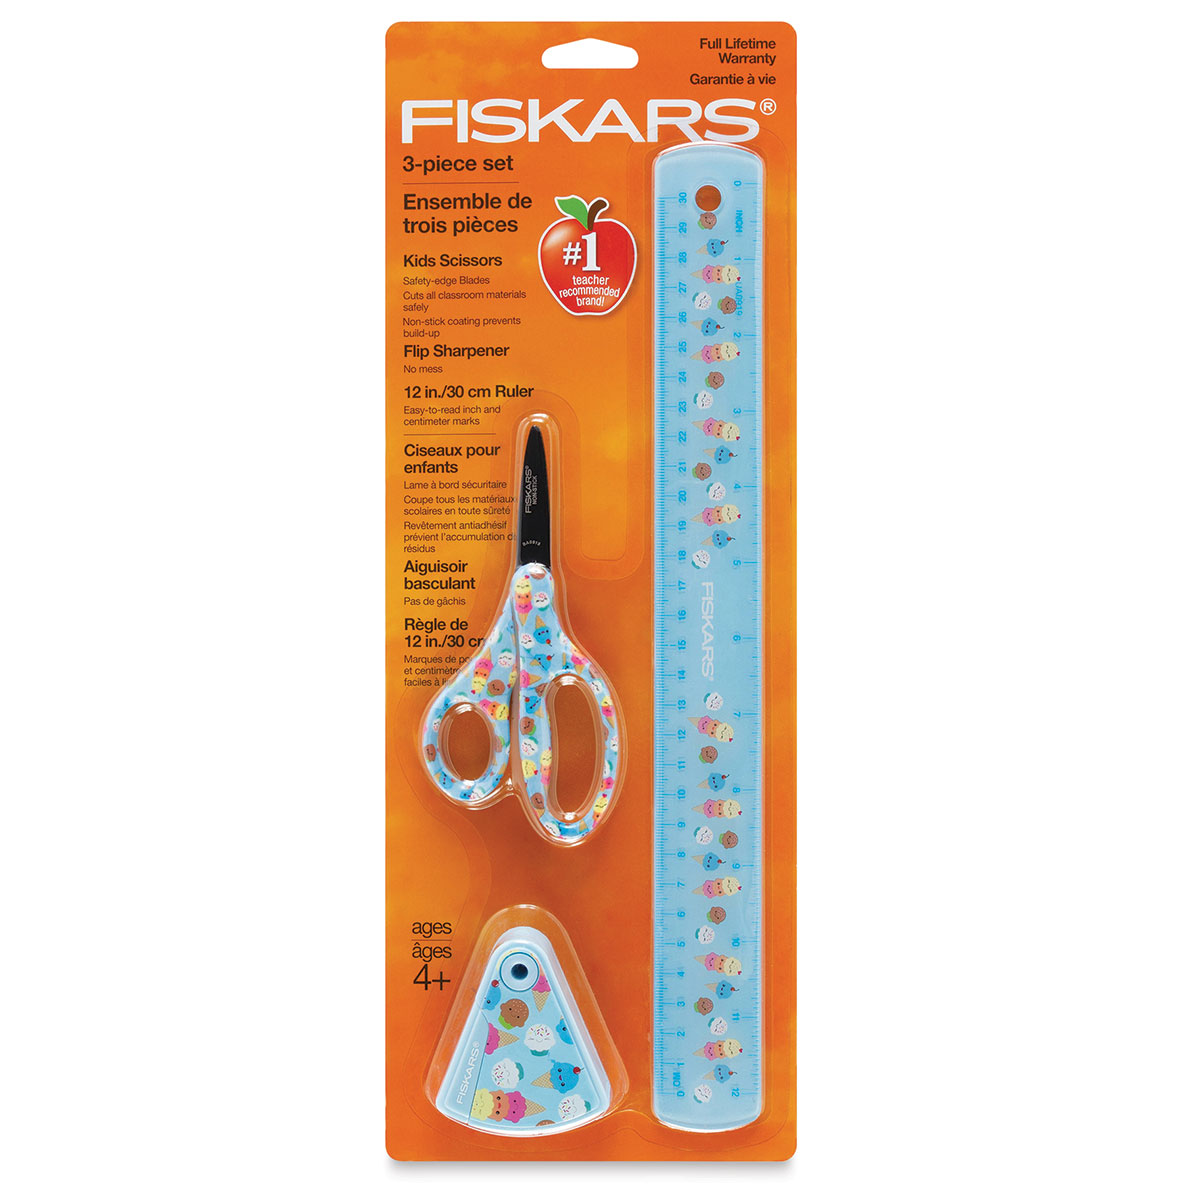 Fiskars Designer Child 3-Piece Set, 5 Scissors, 12 Ruler and Sharpener